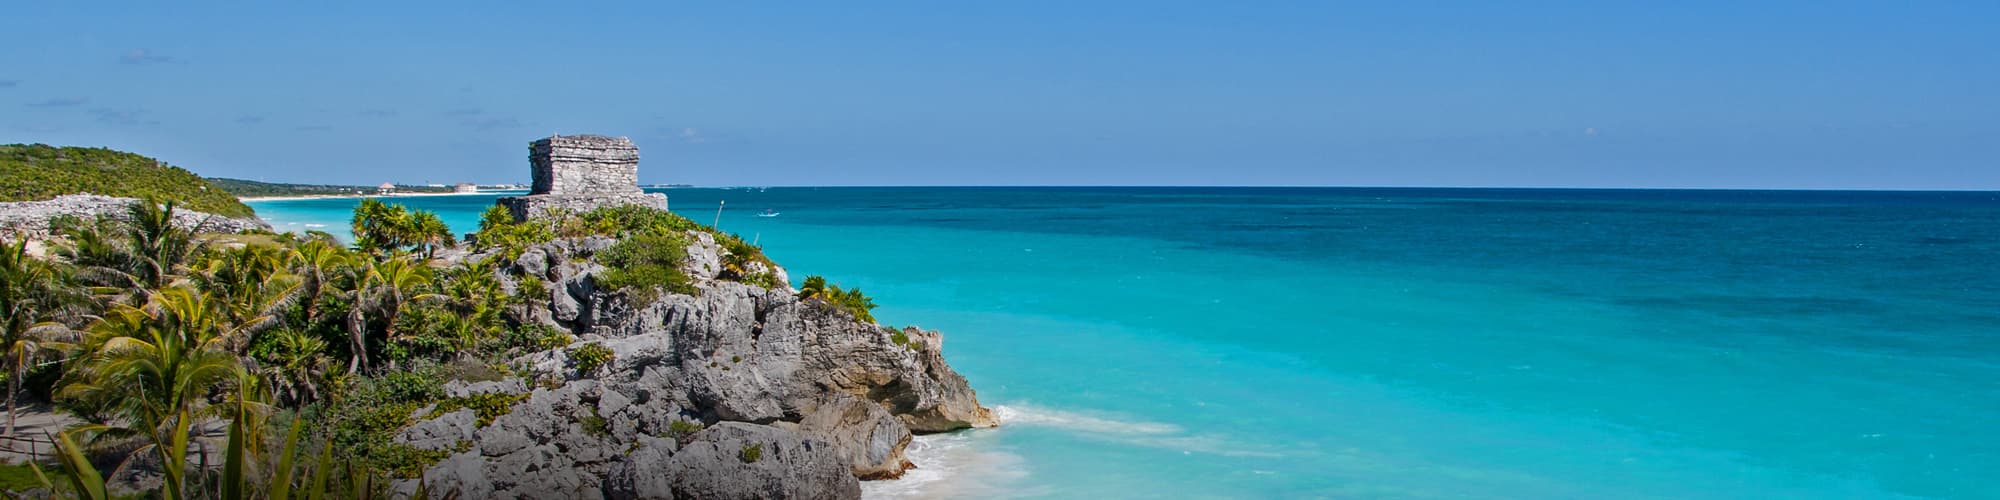 Voyage au Yucatan et Caraïbes © markross / Istock